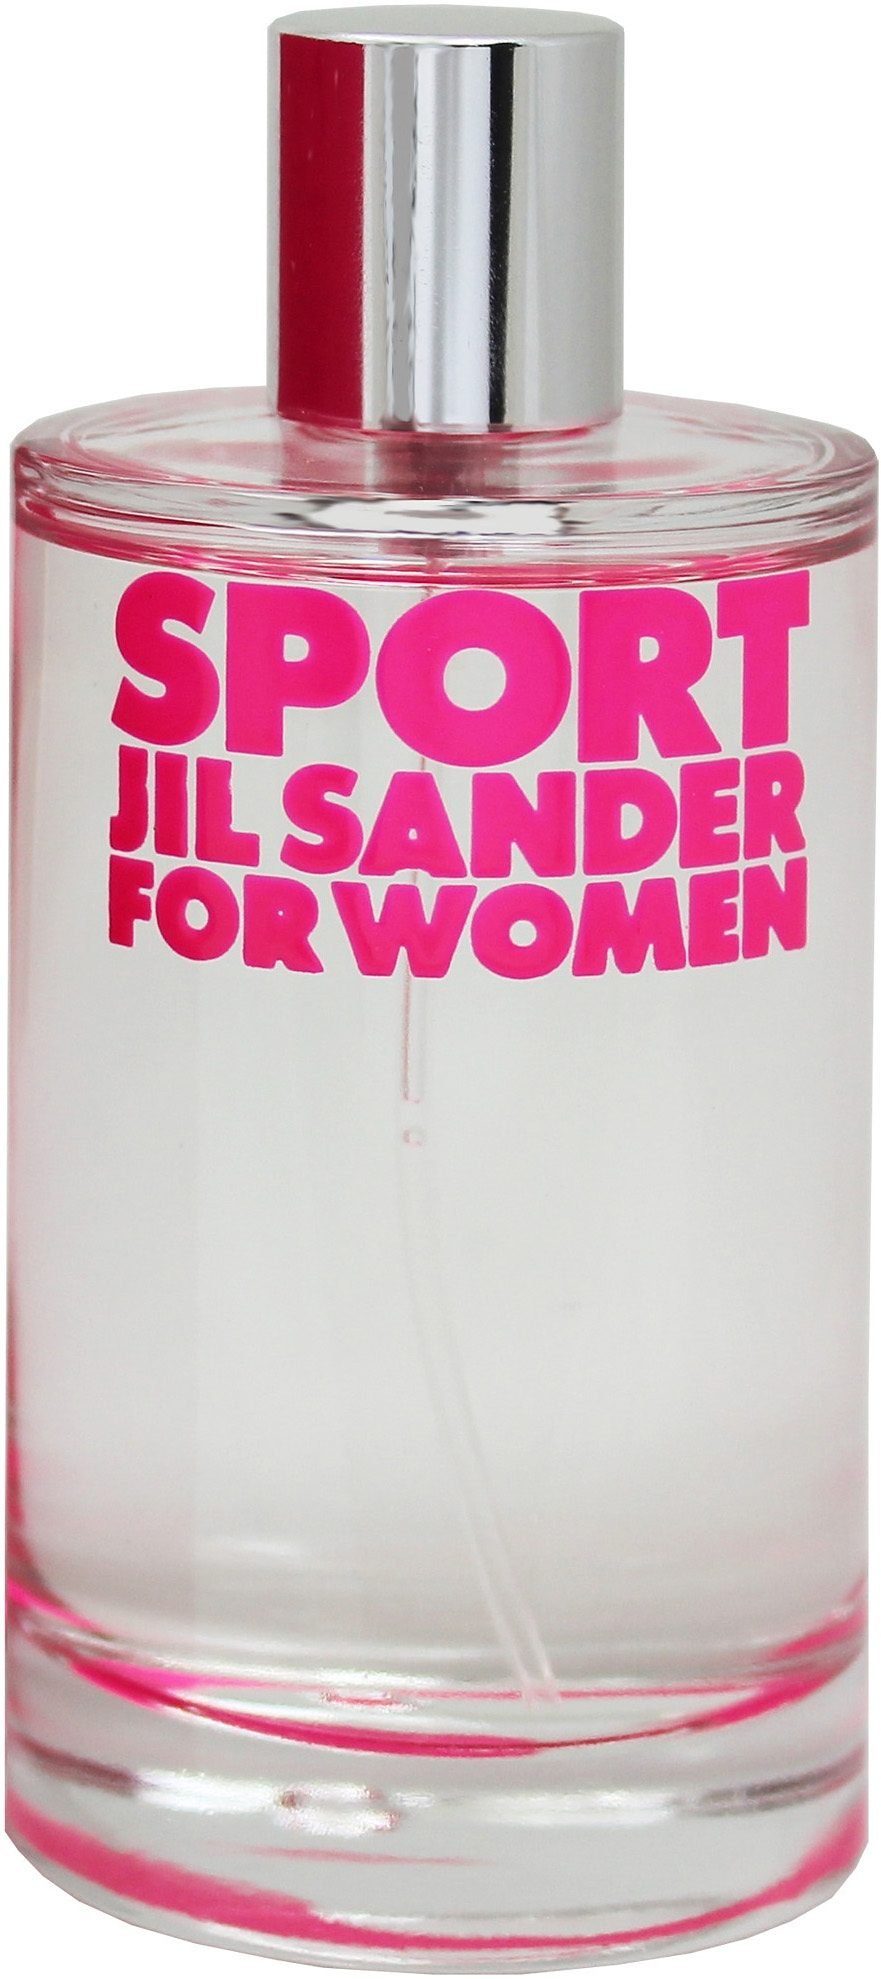 de Eau JIL Toilette for Sport Woman SANDER